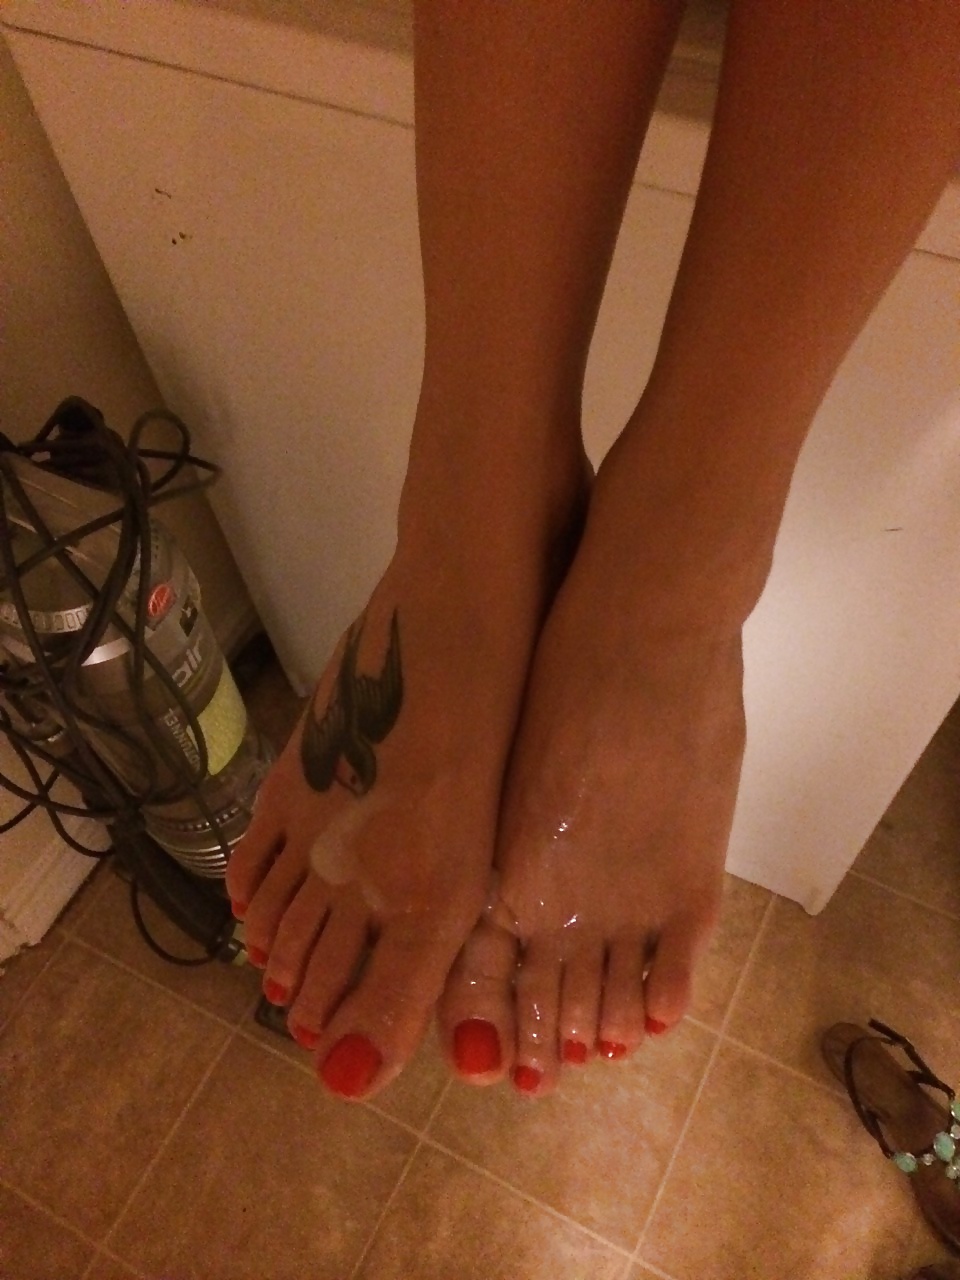 Feet.....cim on them if youd like :)